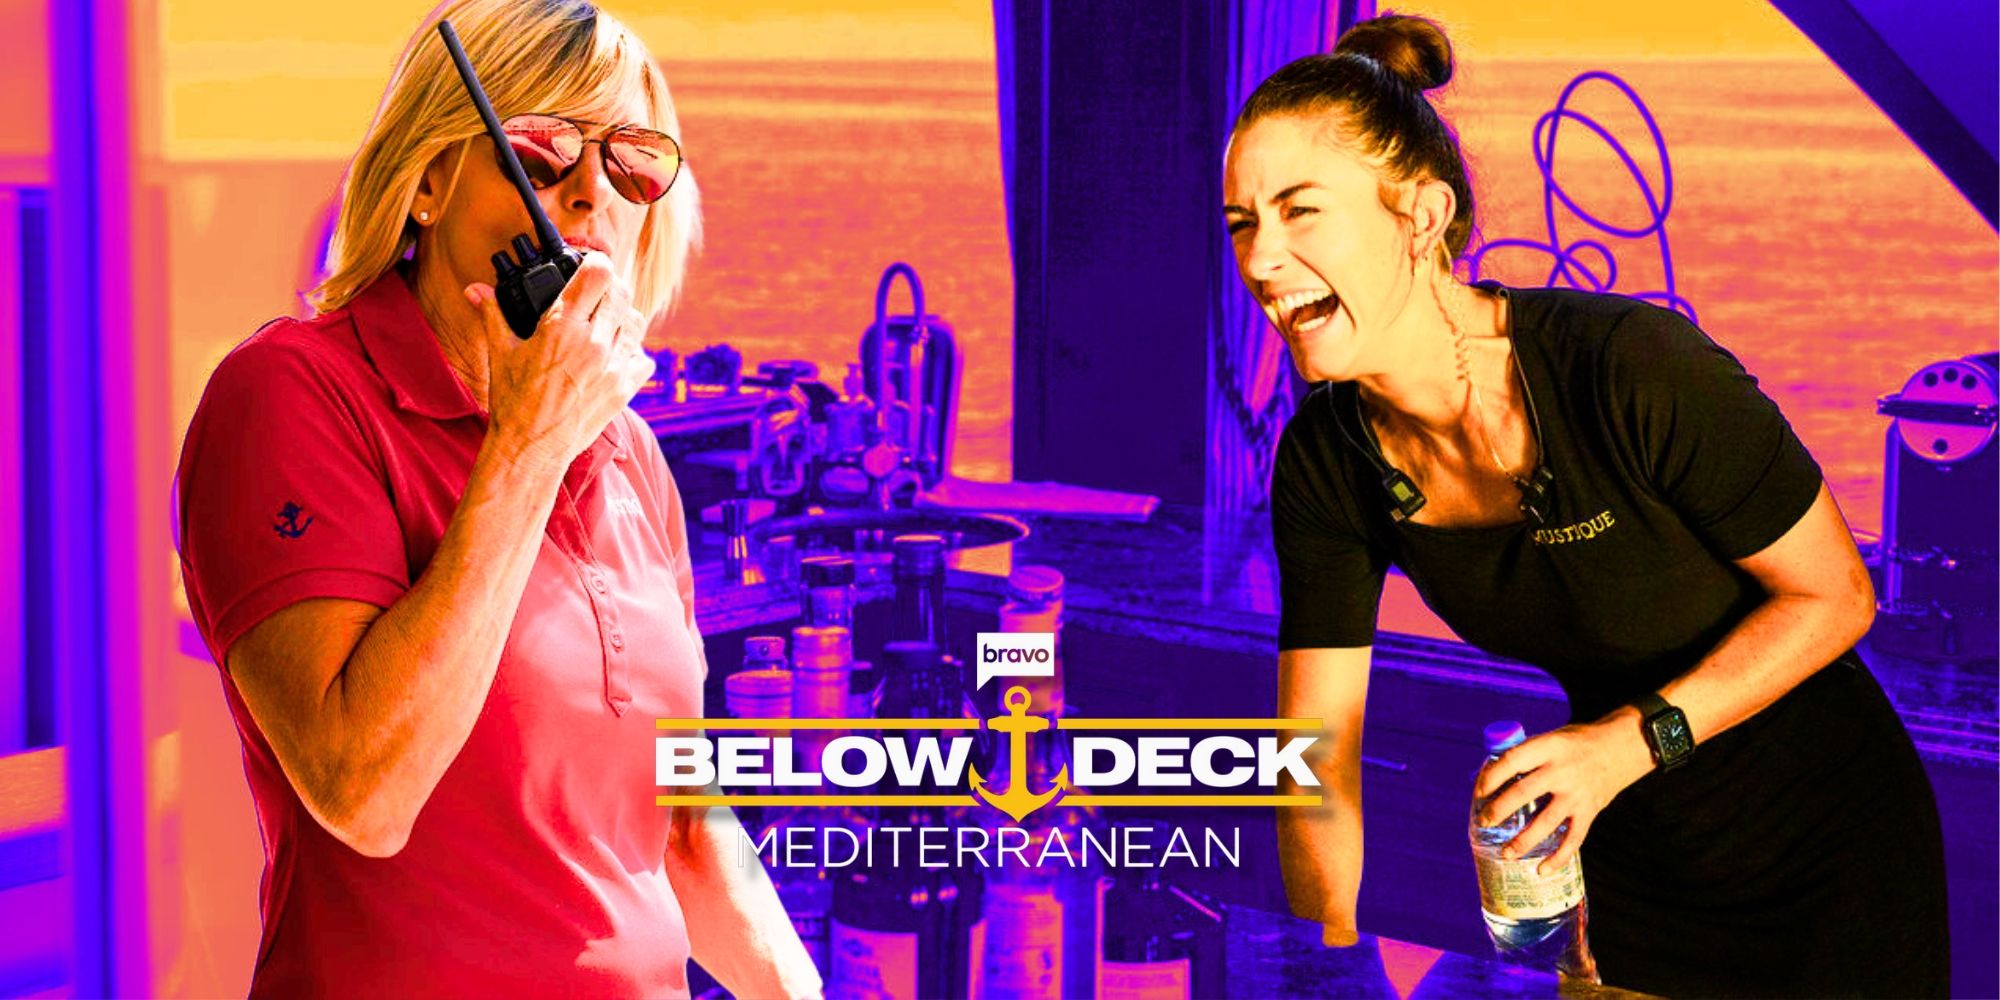 Below Deck Mediterranean Season 9 Captain sandy and aesha montage together with the below deck med logo